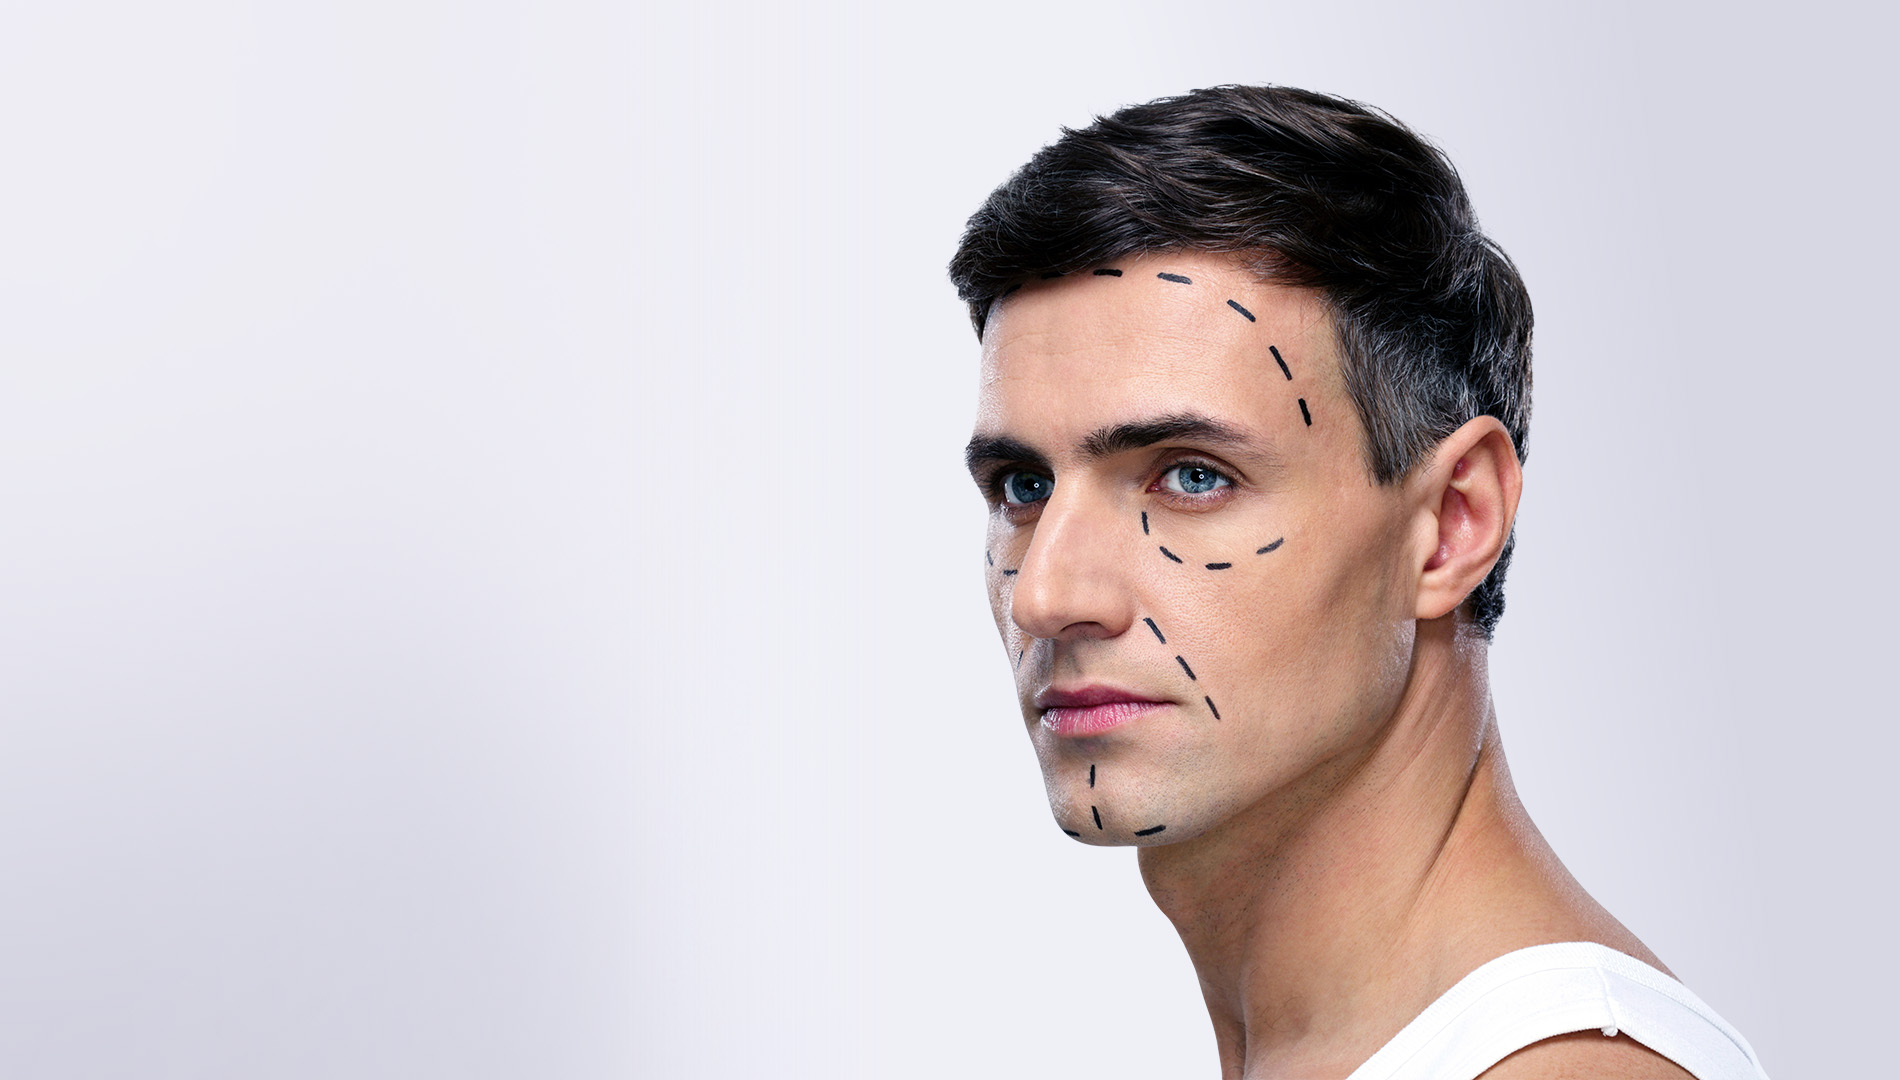 man with facial markings